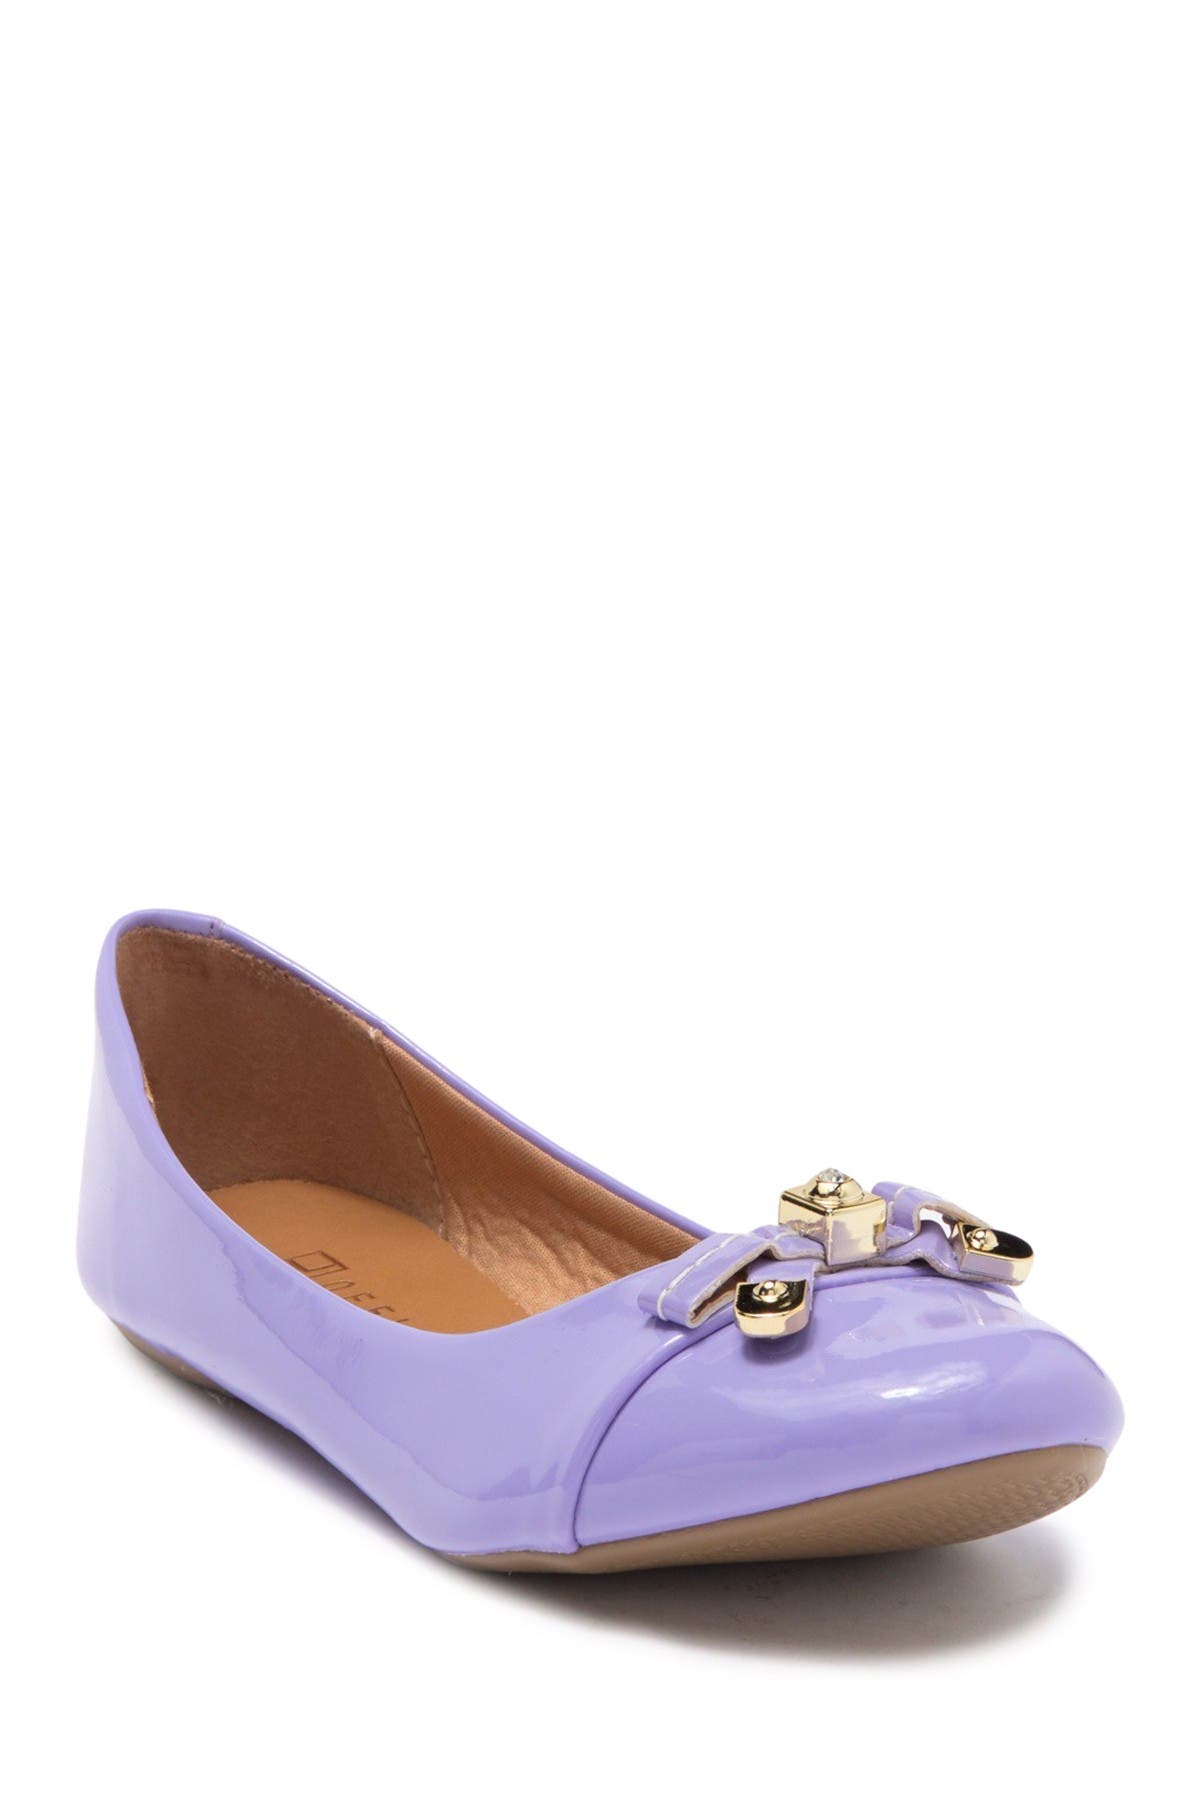 hyacinth shoe cover